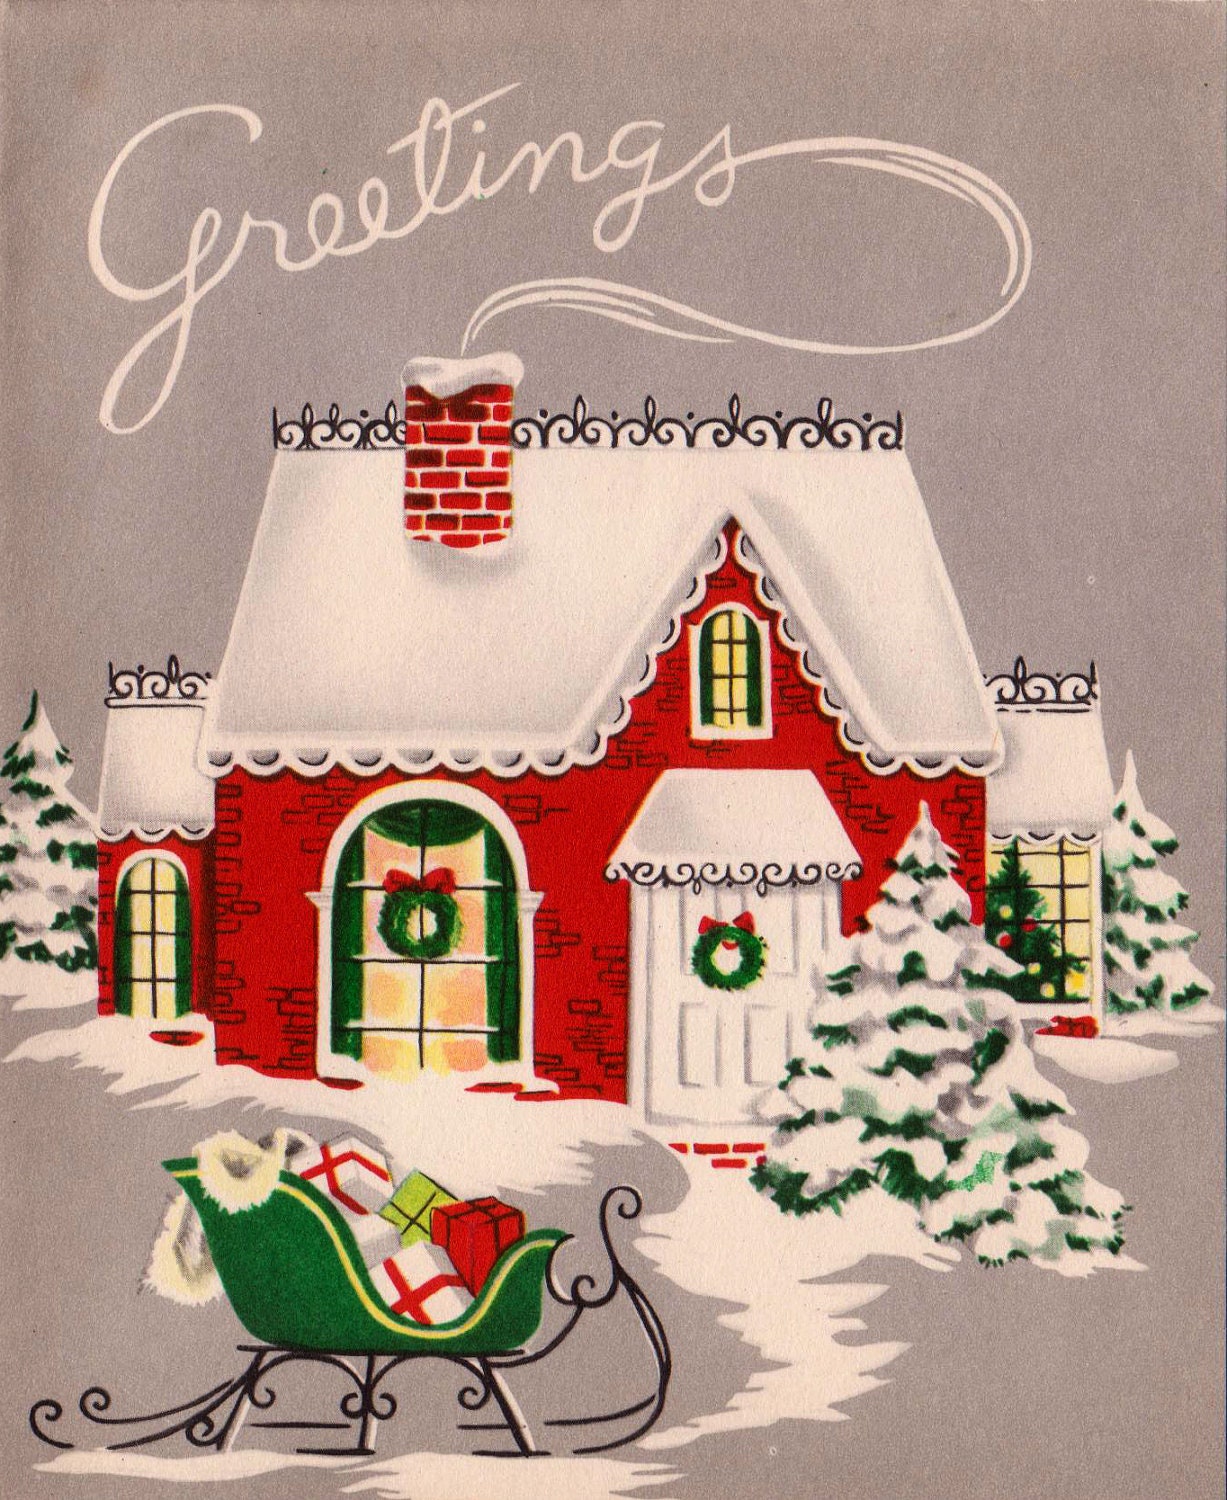 Top 102+ Images public domain 1950’s vintage christmas cards Full HD, 2k, 4k